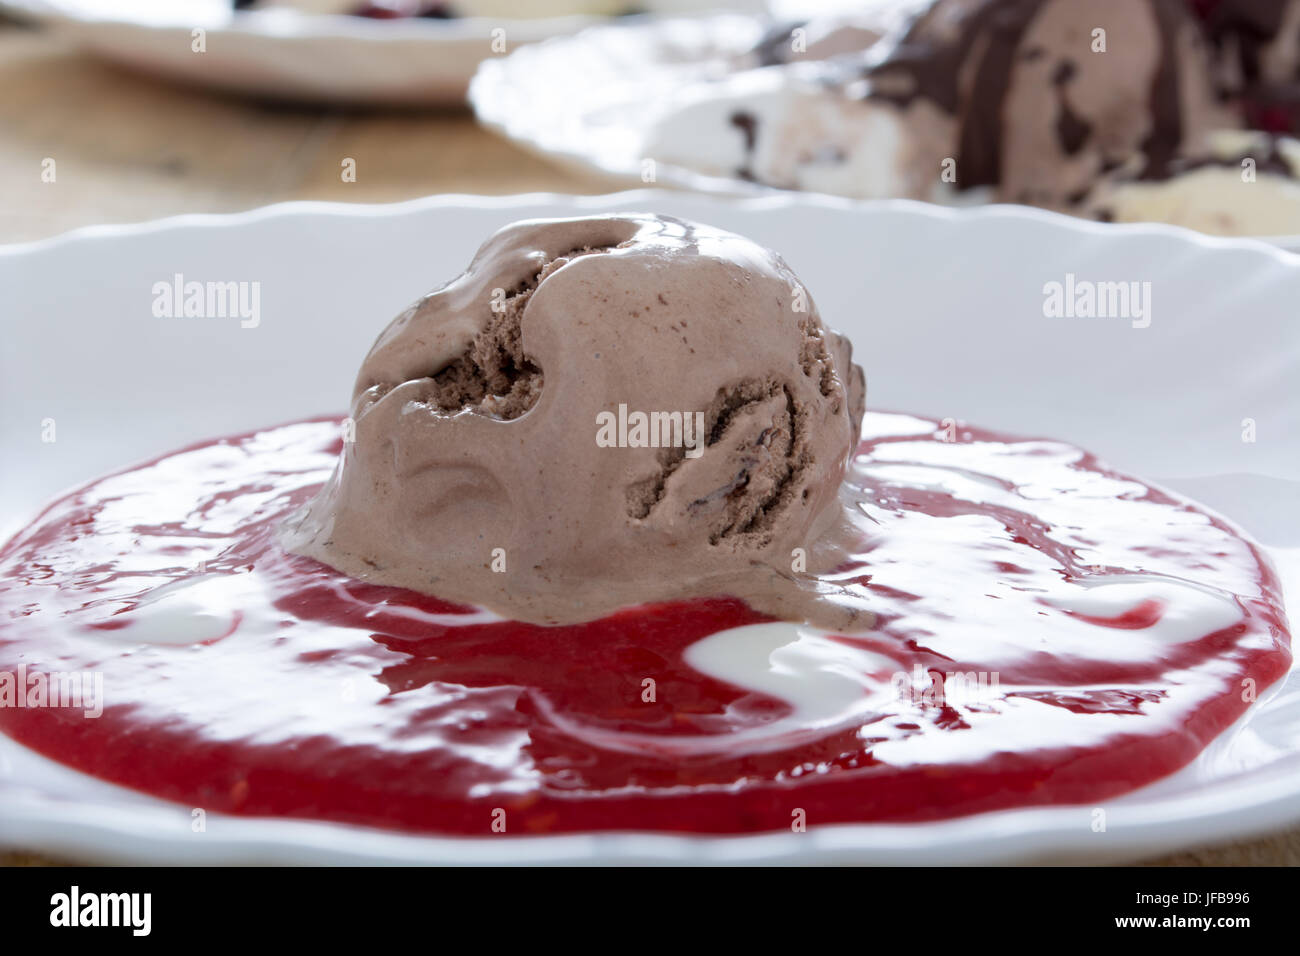 chocolate ice cream on the table Stock Photo